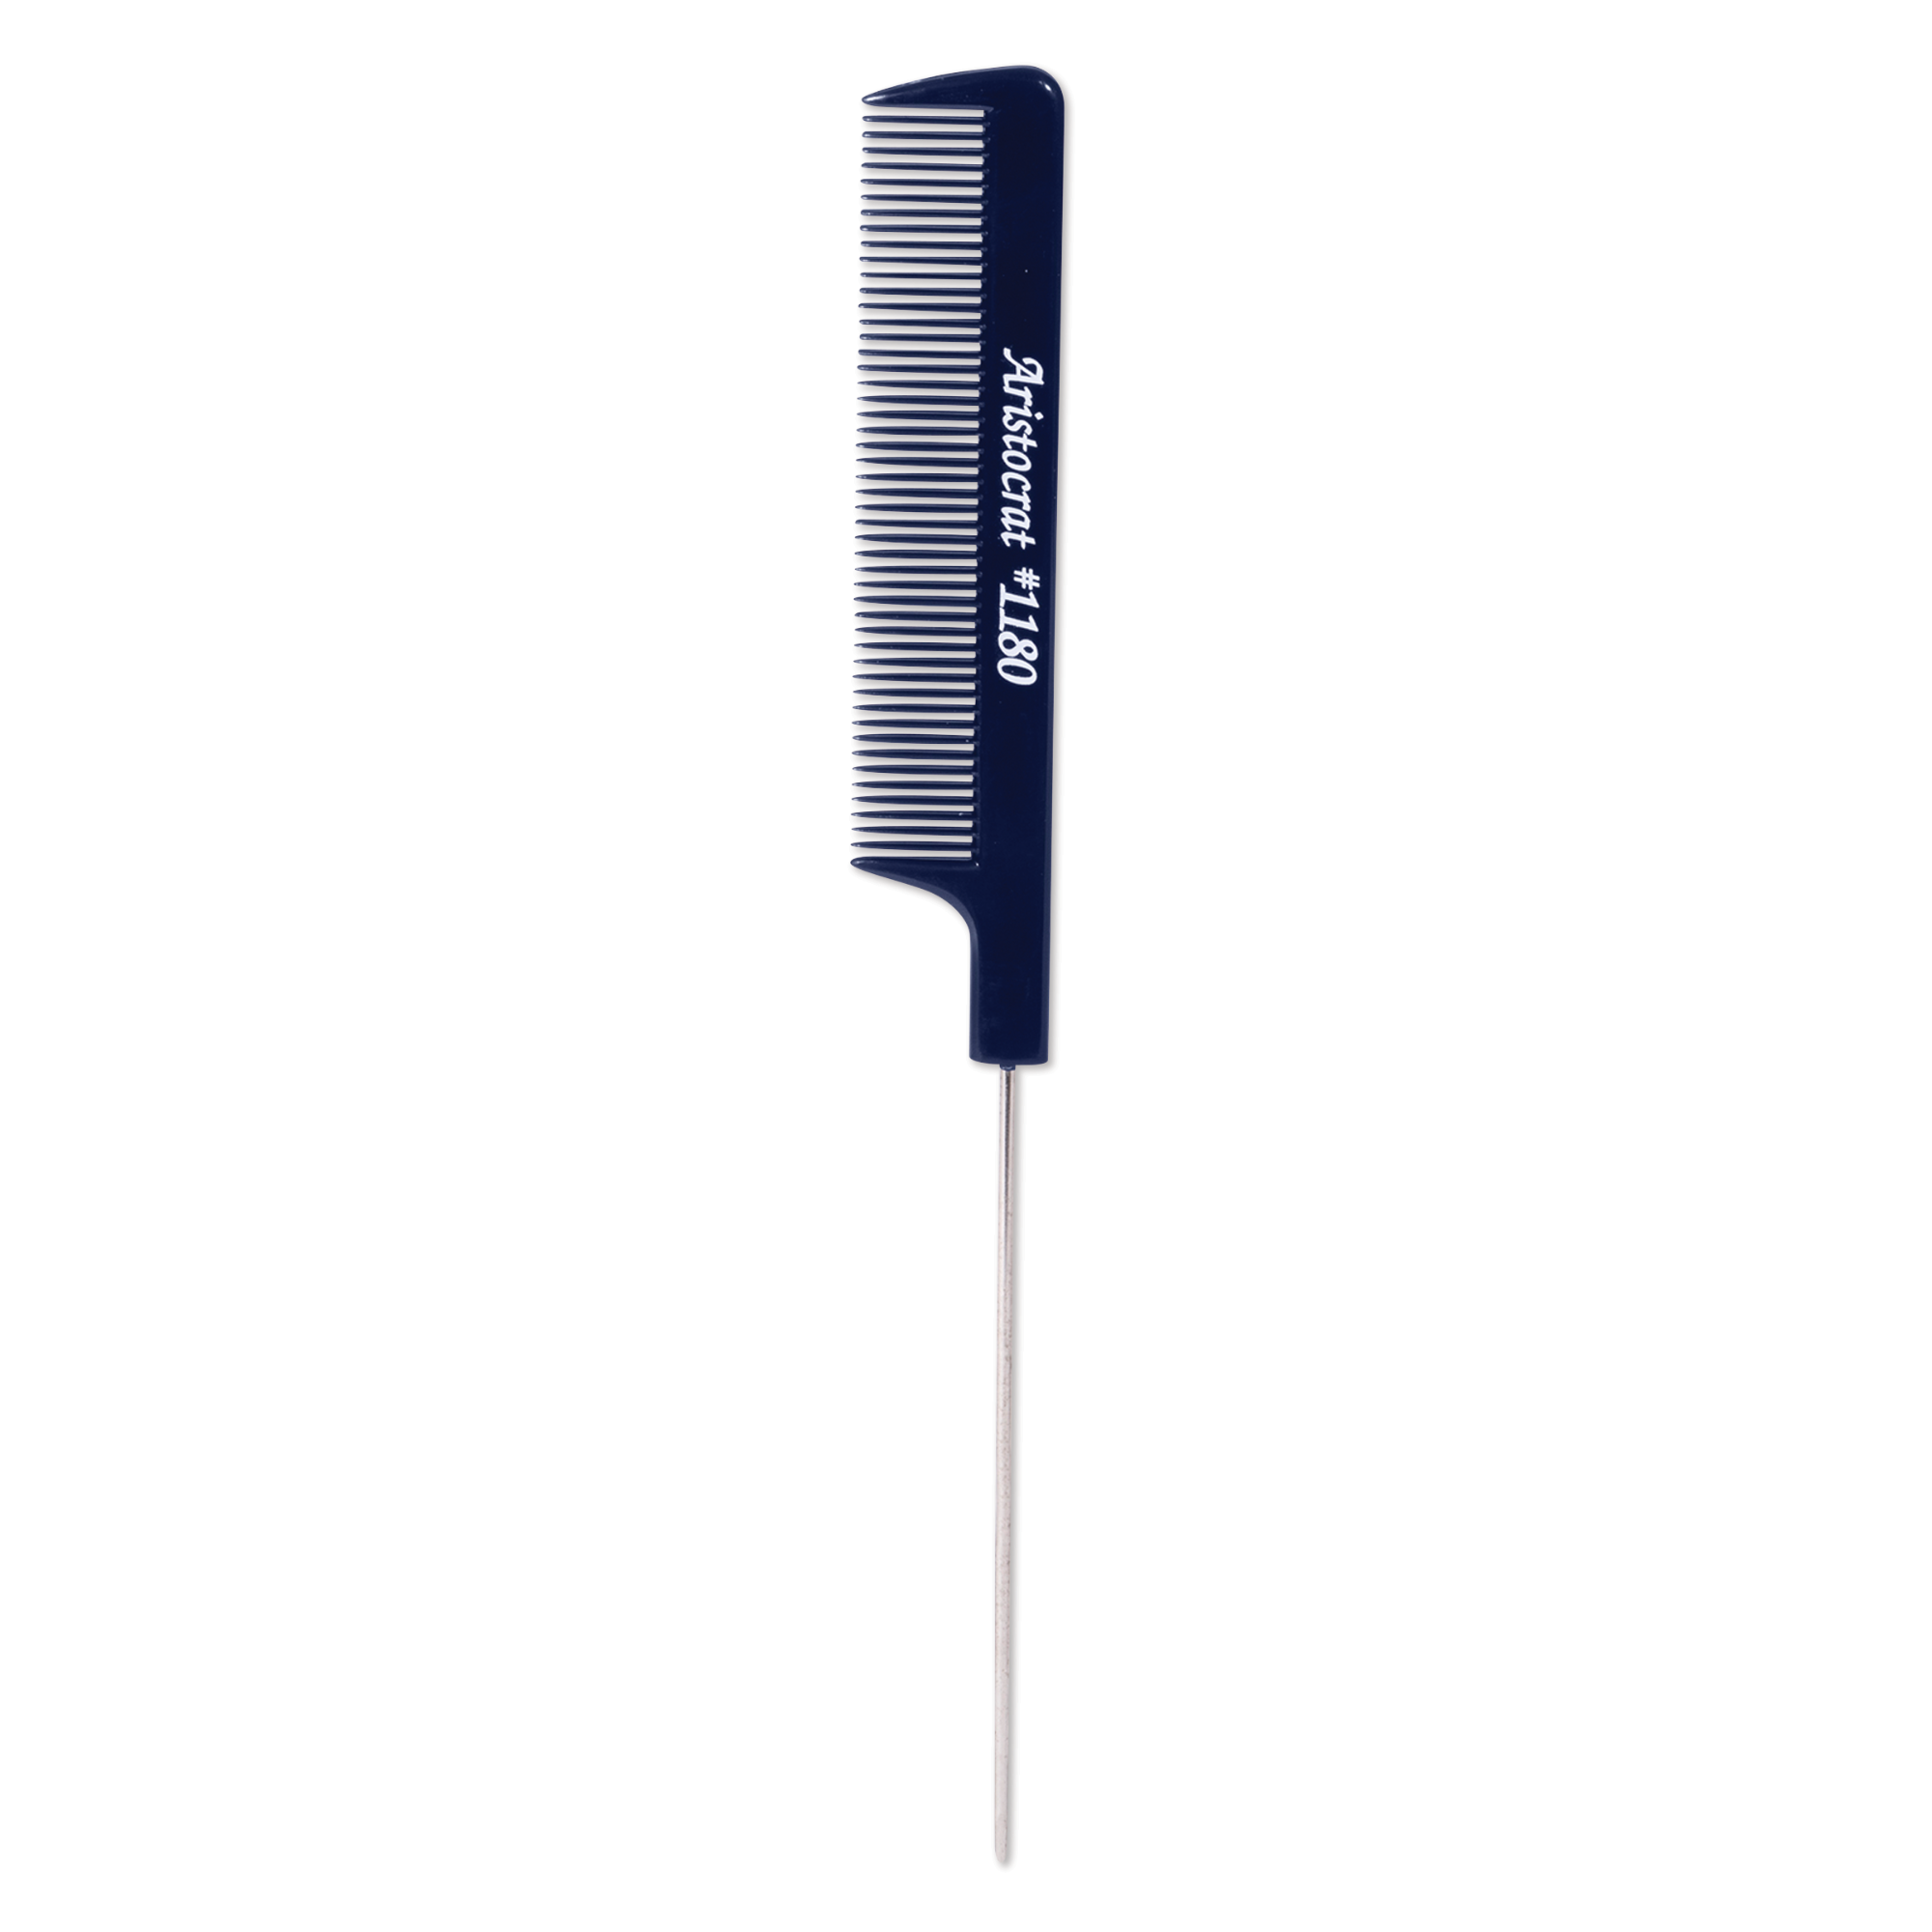 Pin Tail Comb with Coarse Teeth - 8-3/4"